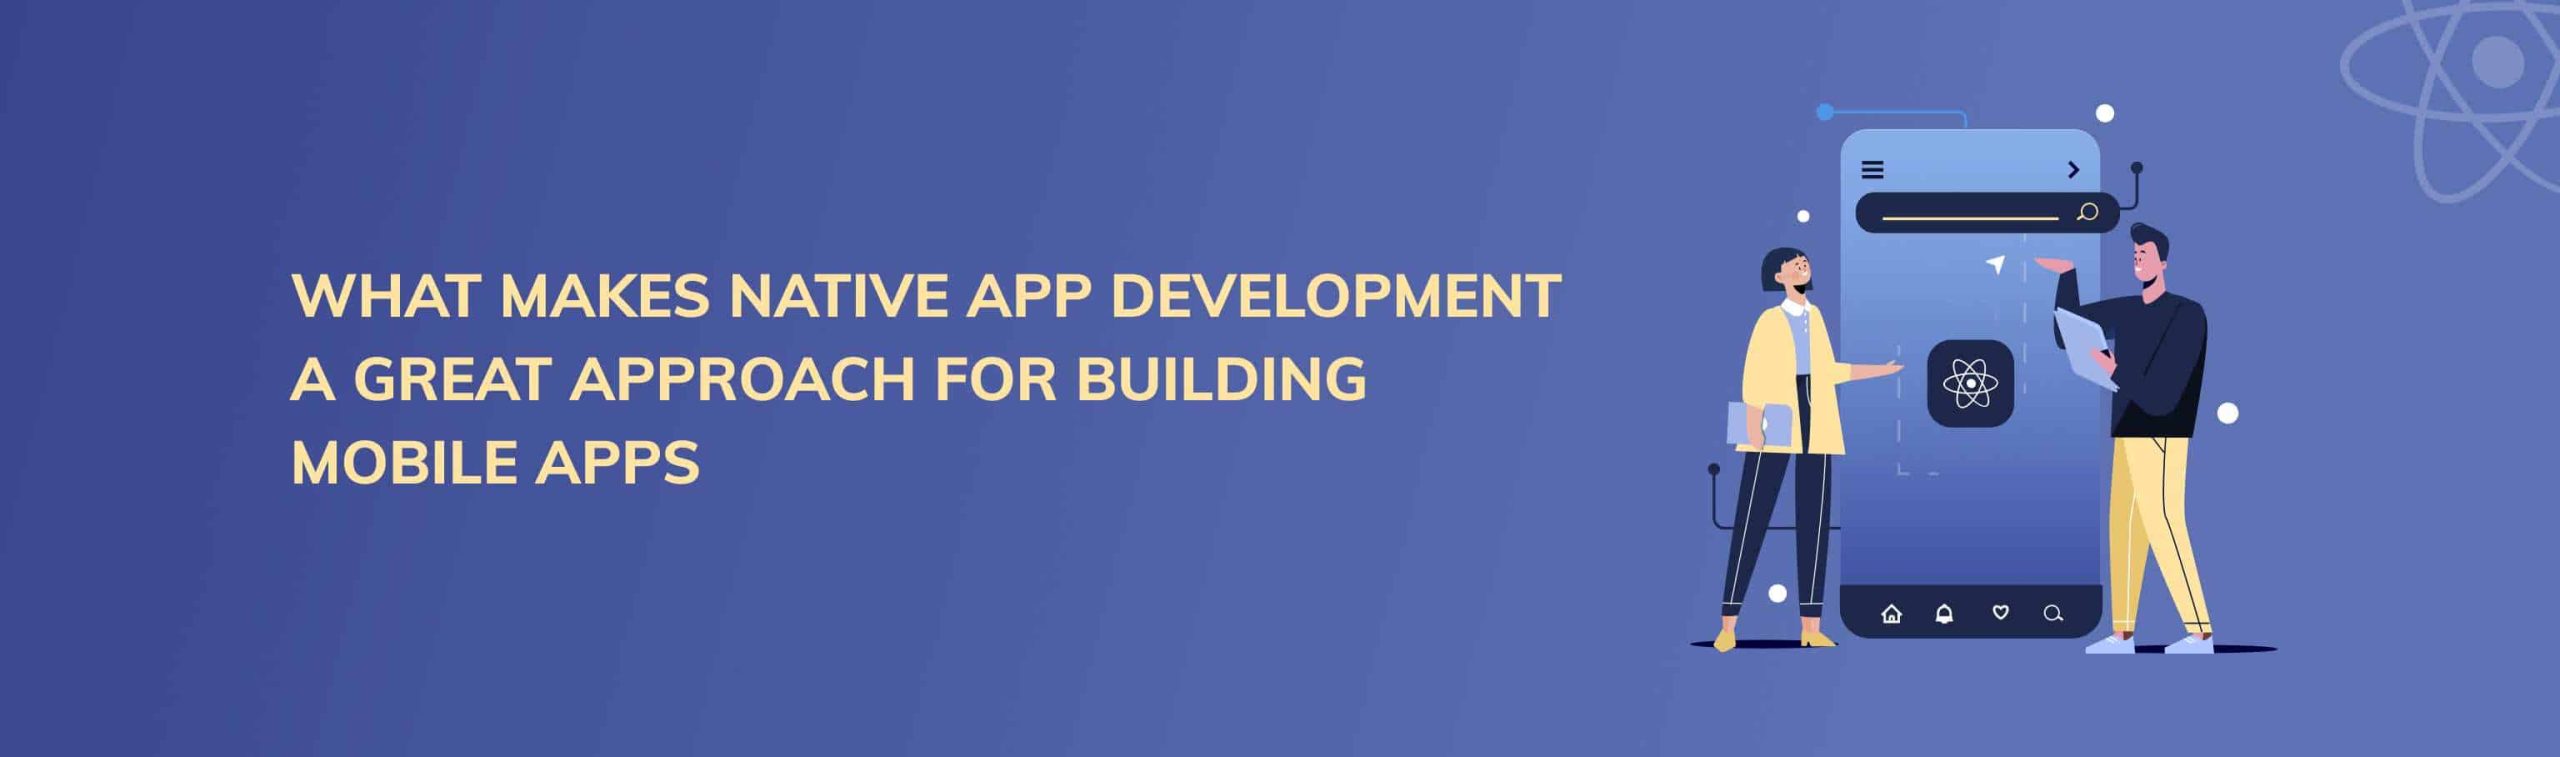 native-app-development